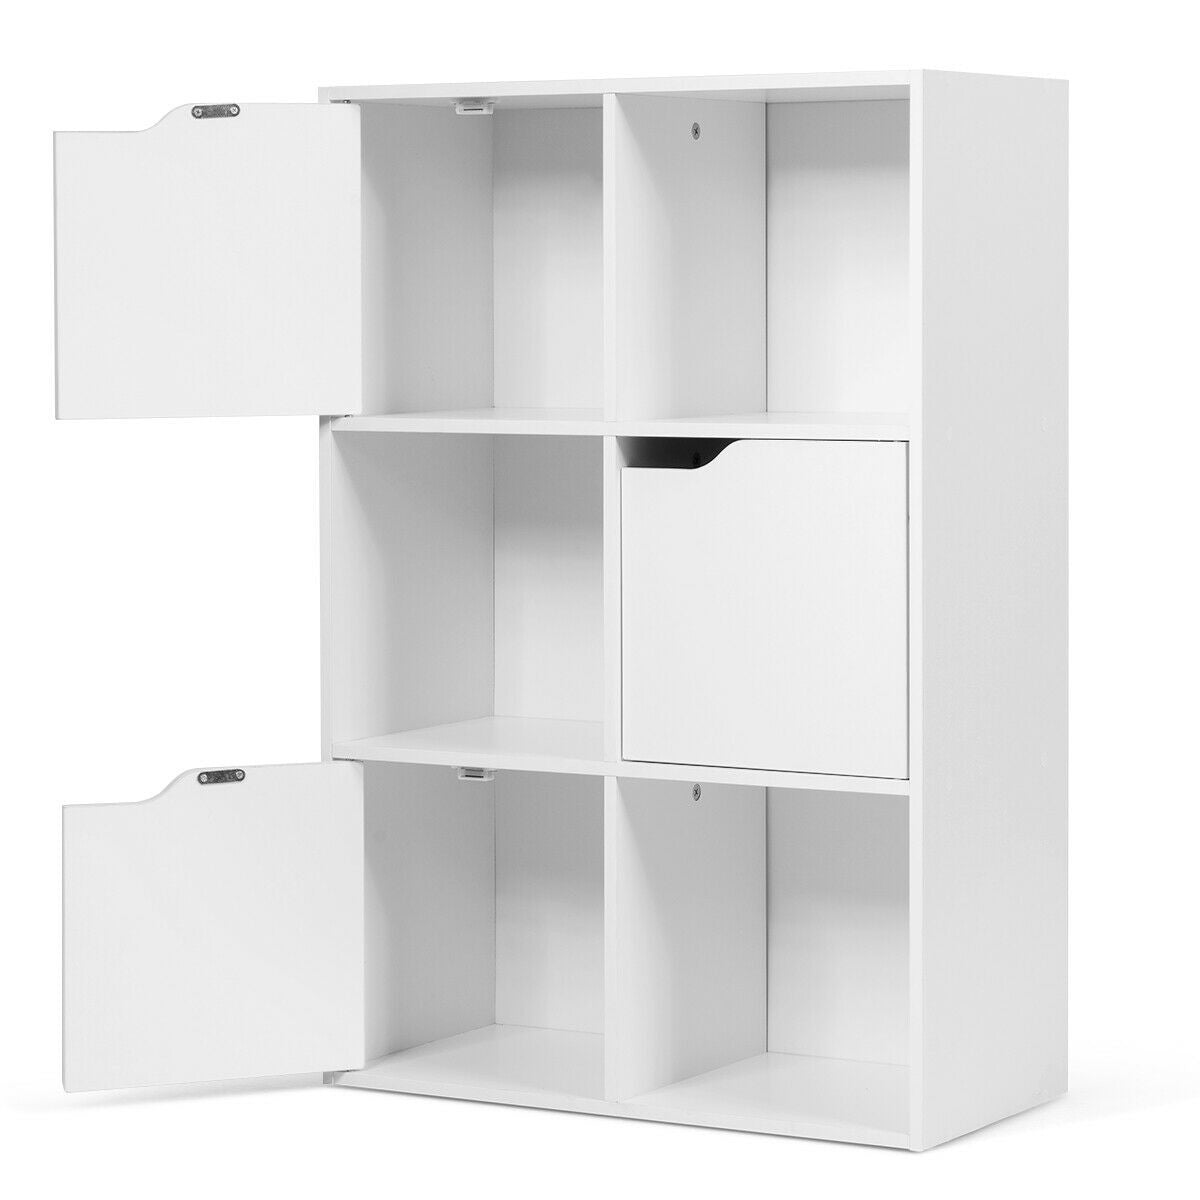 Giantex 6-Cube Storage Organizer